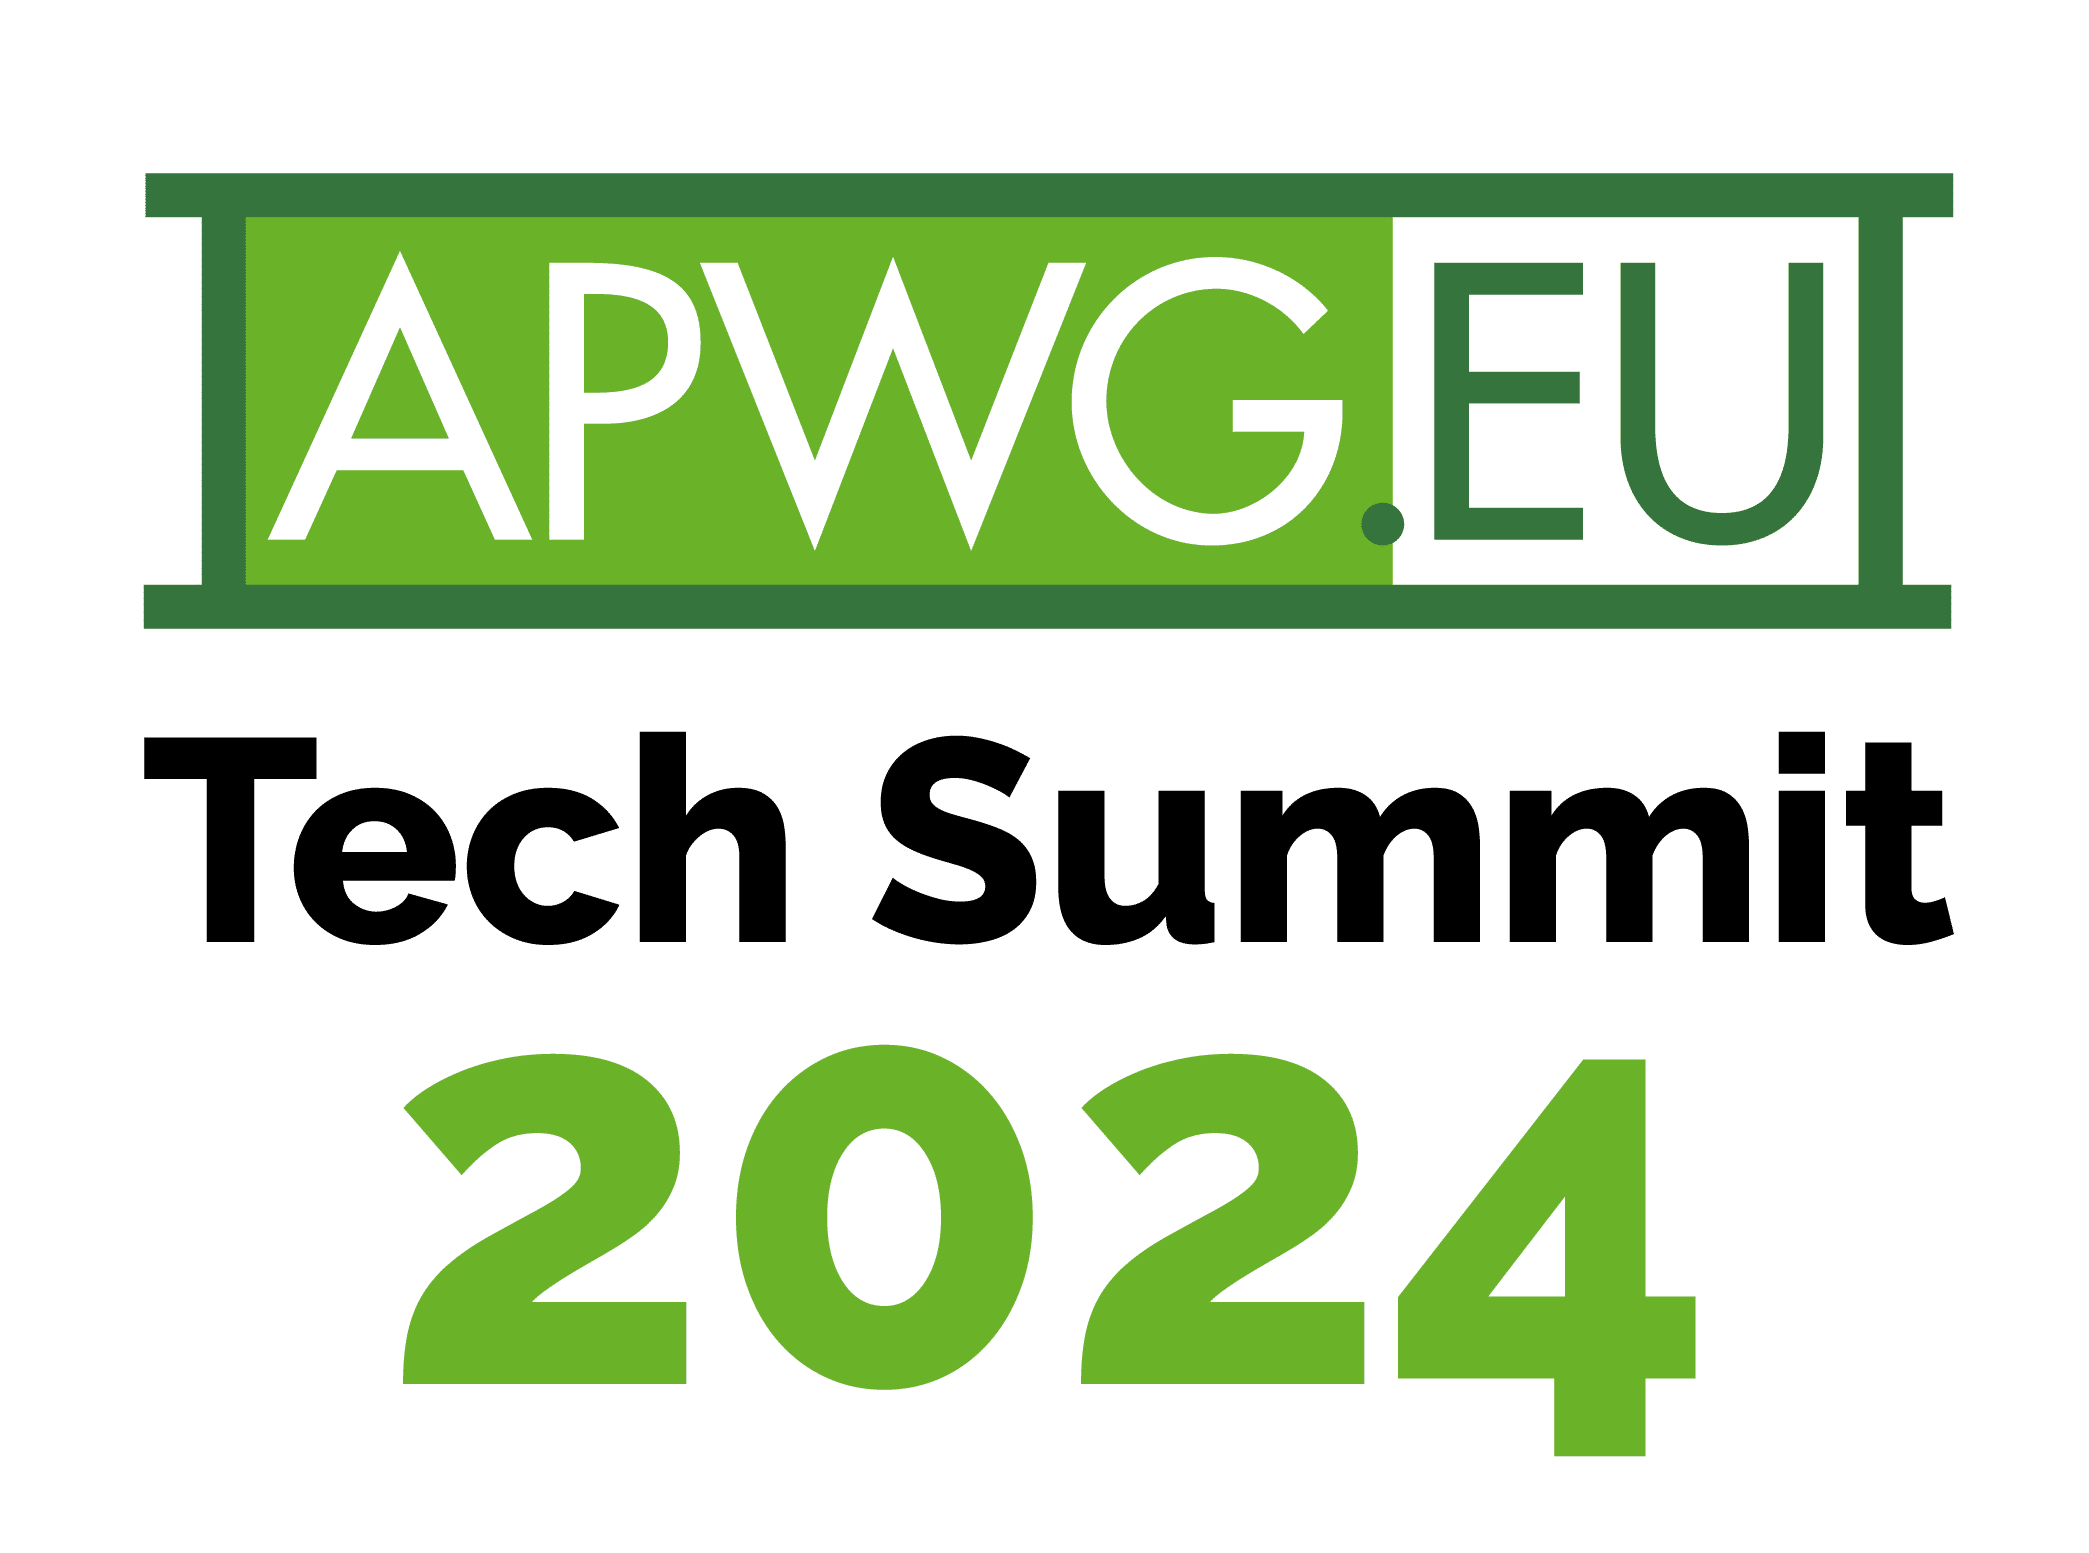 Tech Summit 2024